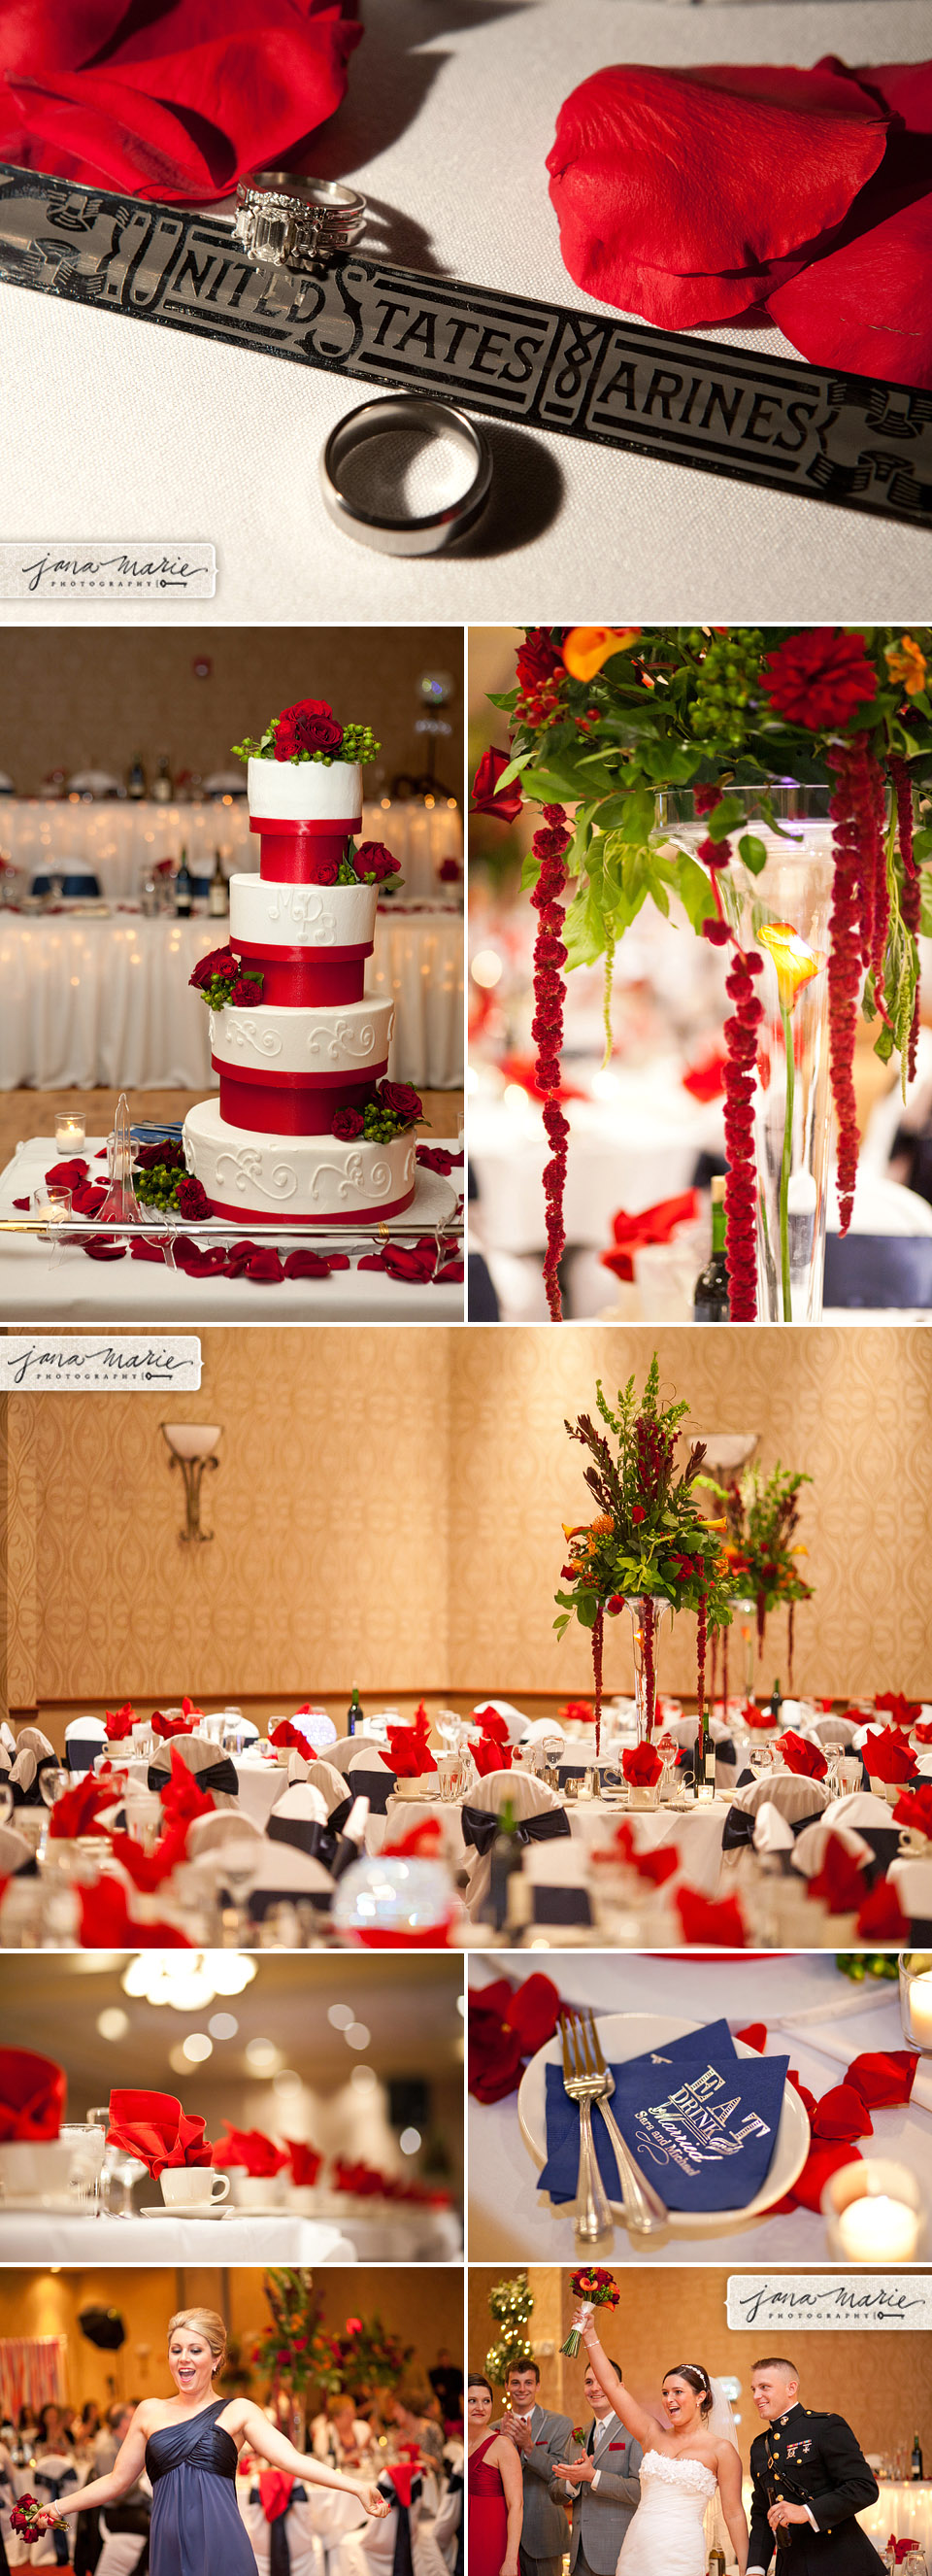 Village Gardens, Flowers, Reception, US Marine, American colors, cake, details